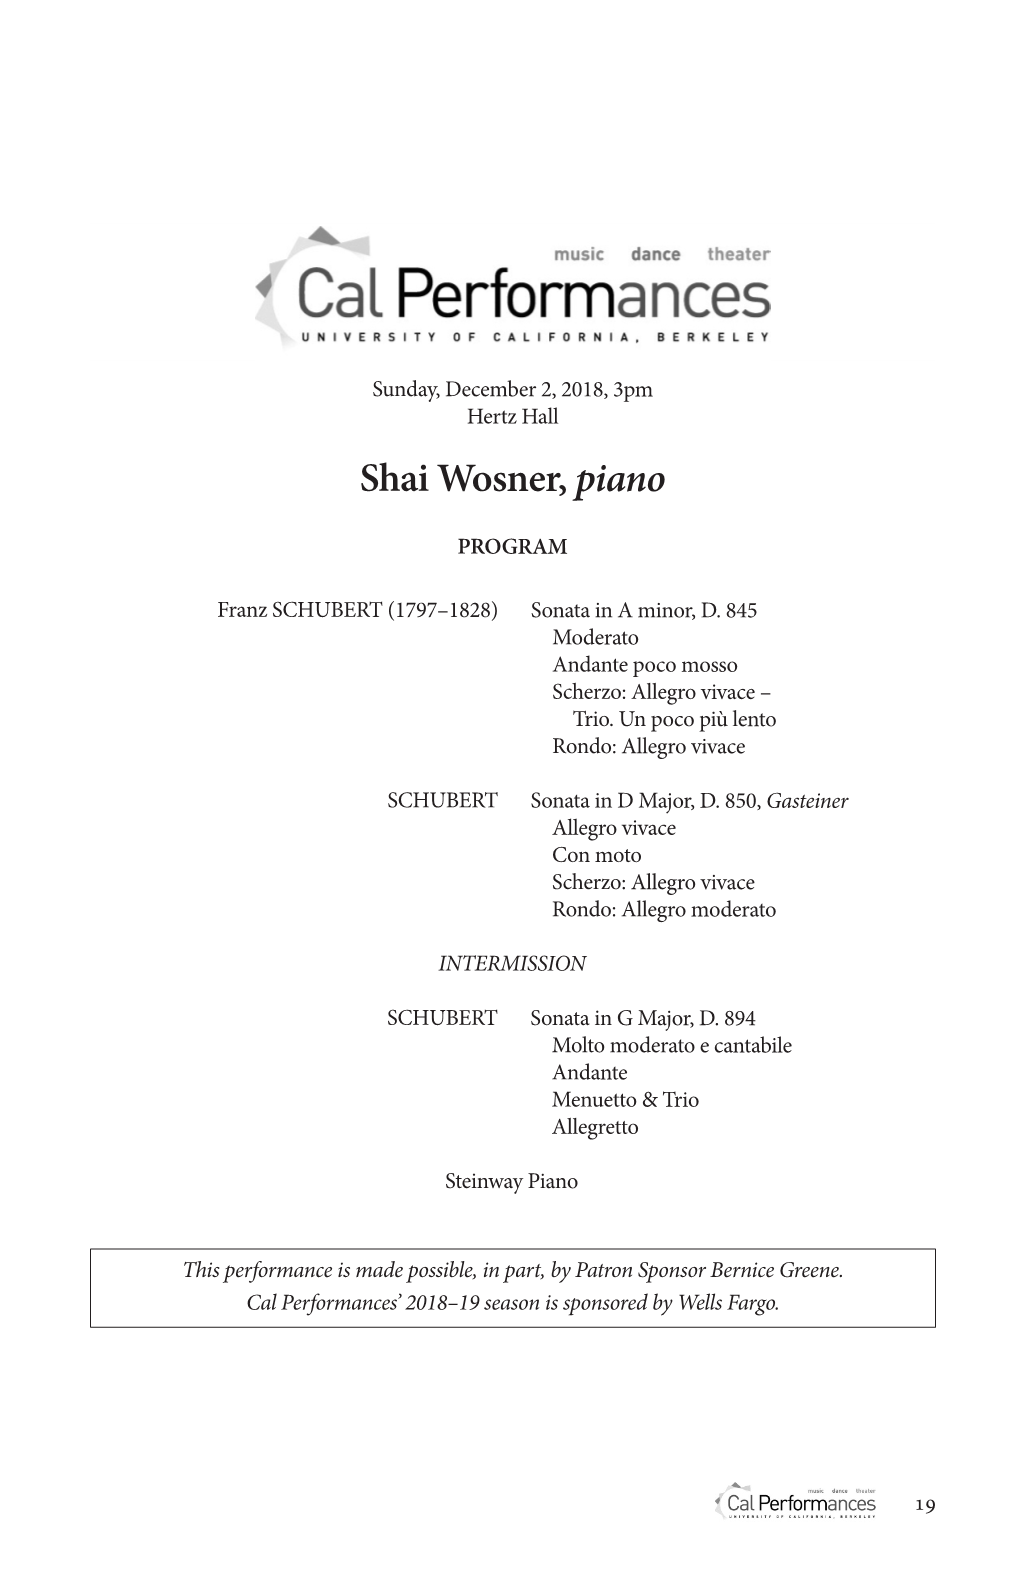 Shai Wosner, Piano